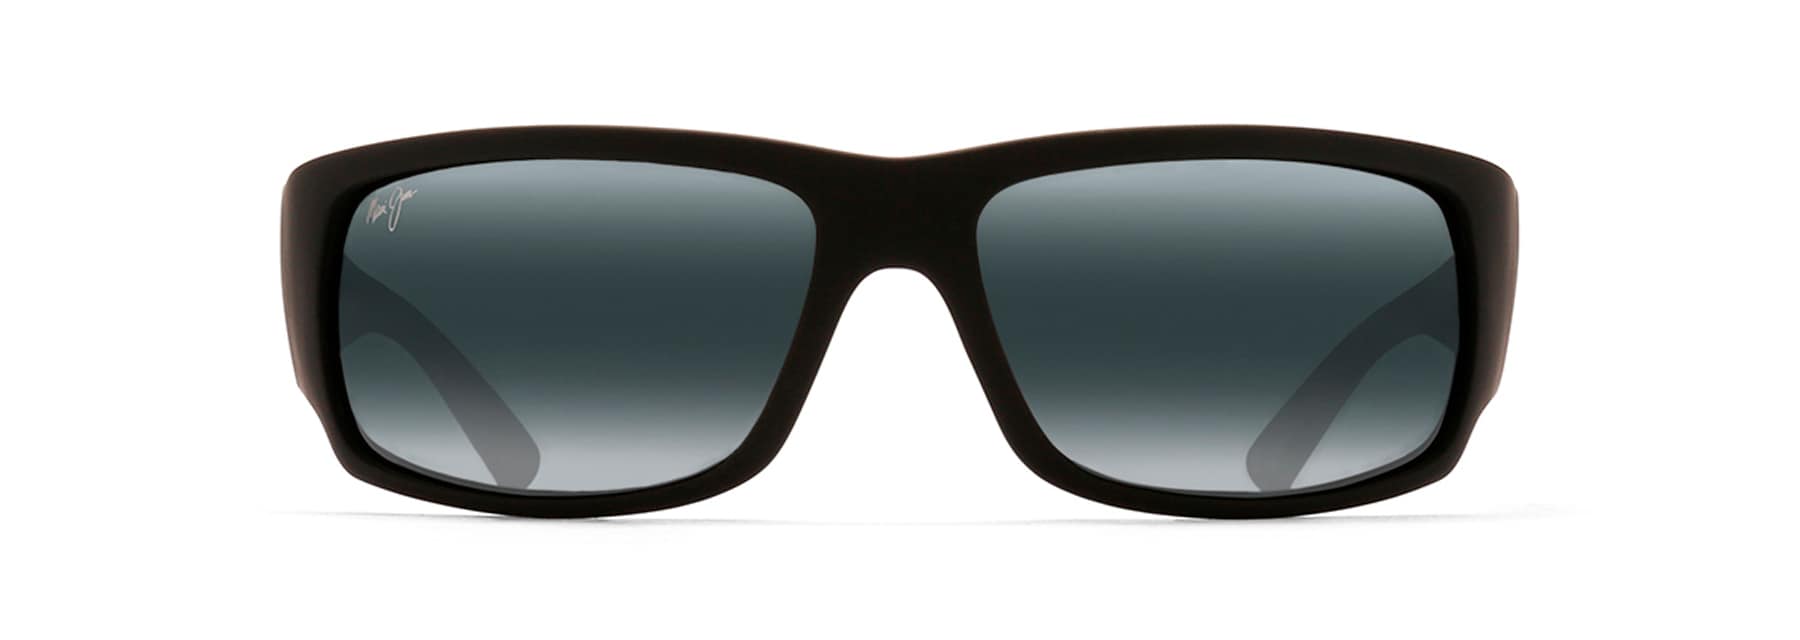 Maui Jim World Cup Polarized Sunglasses, REI Co-op